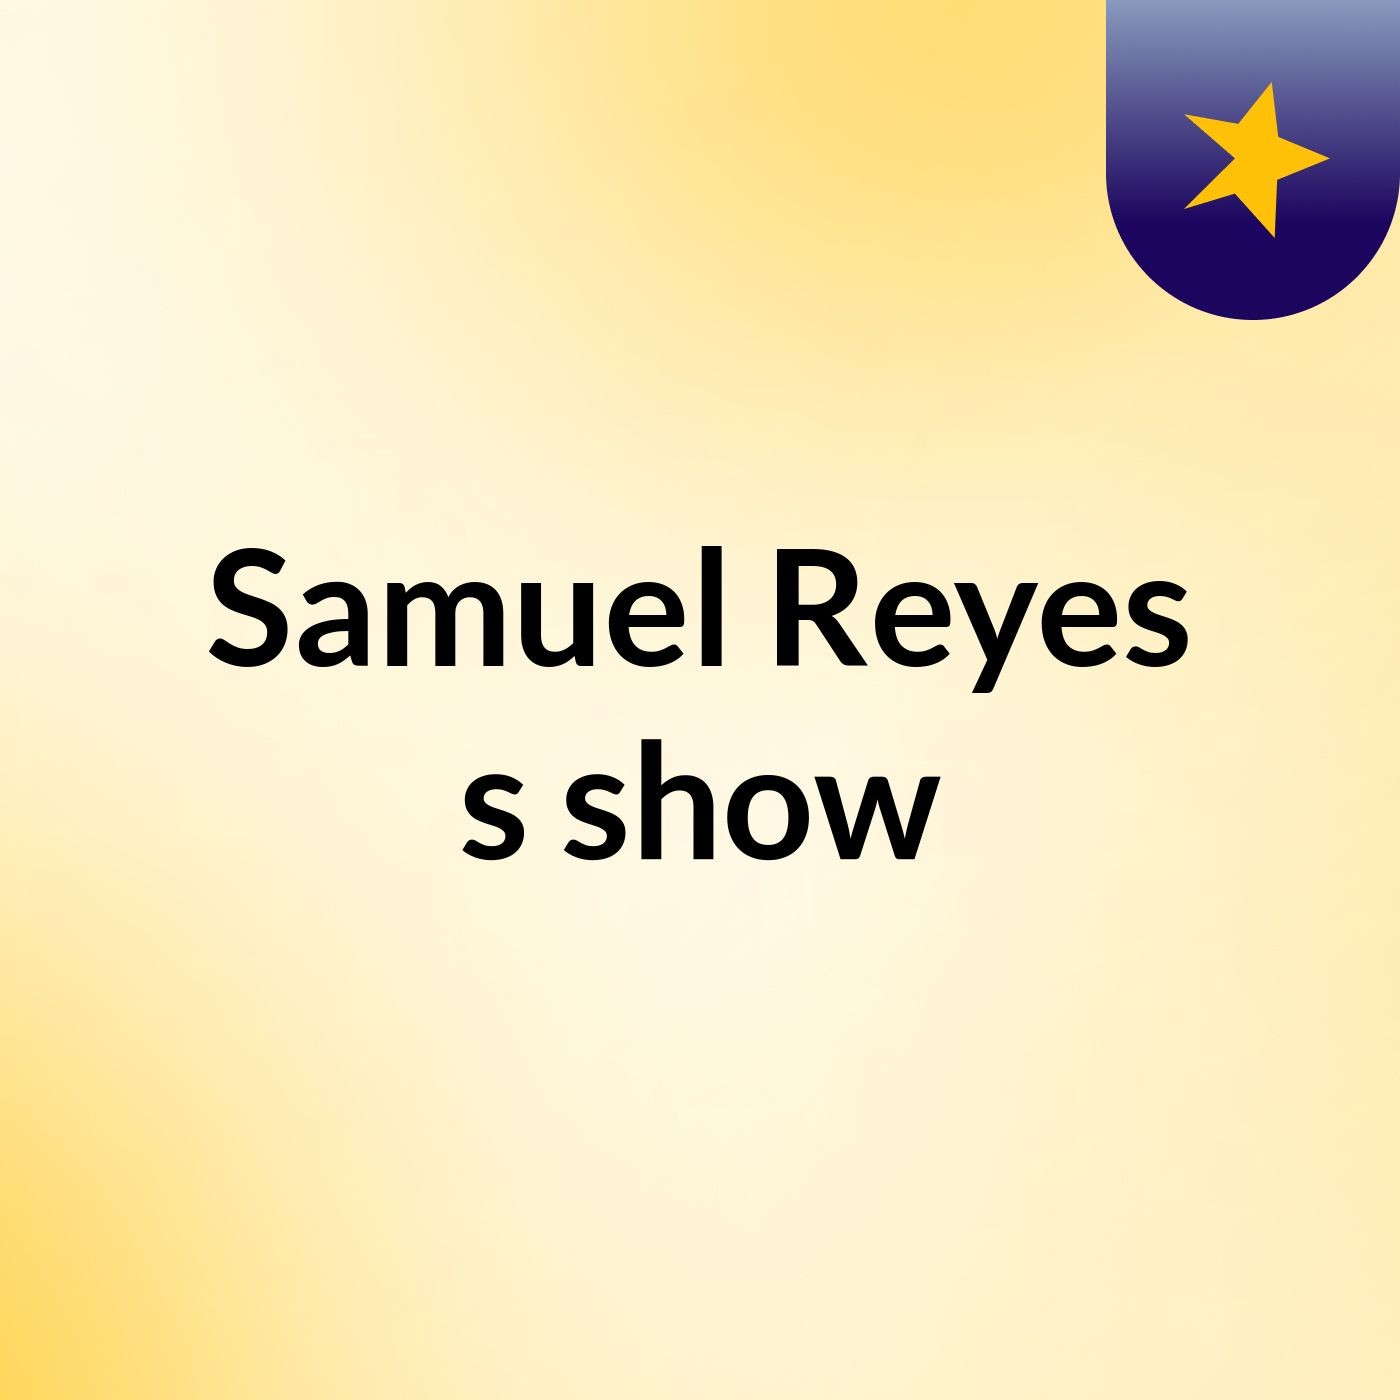 Samuel Reyes's show